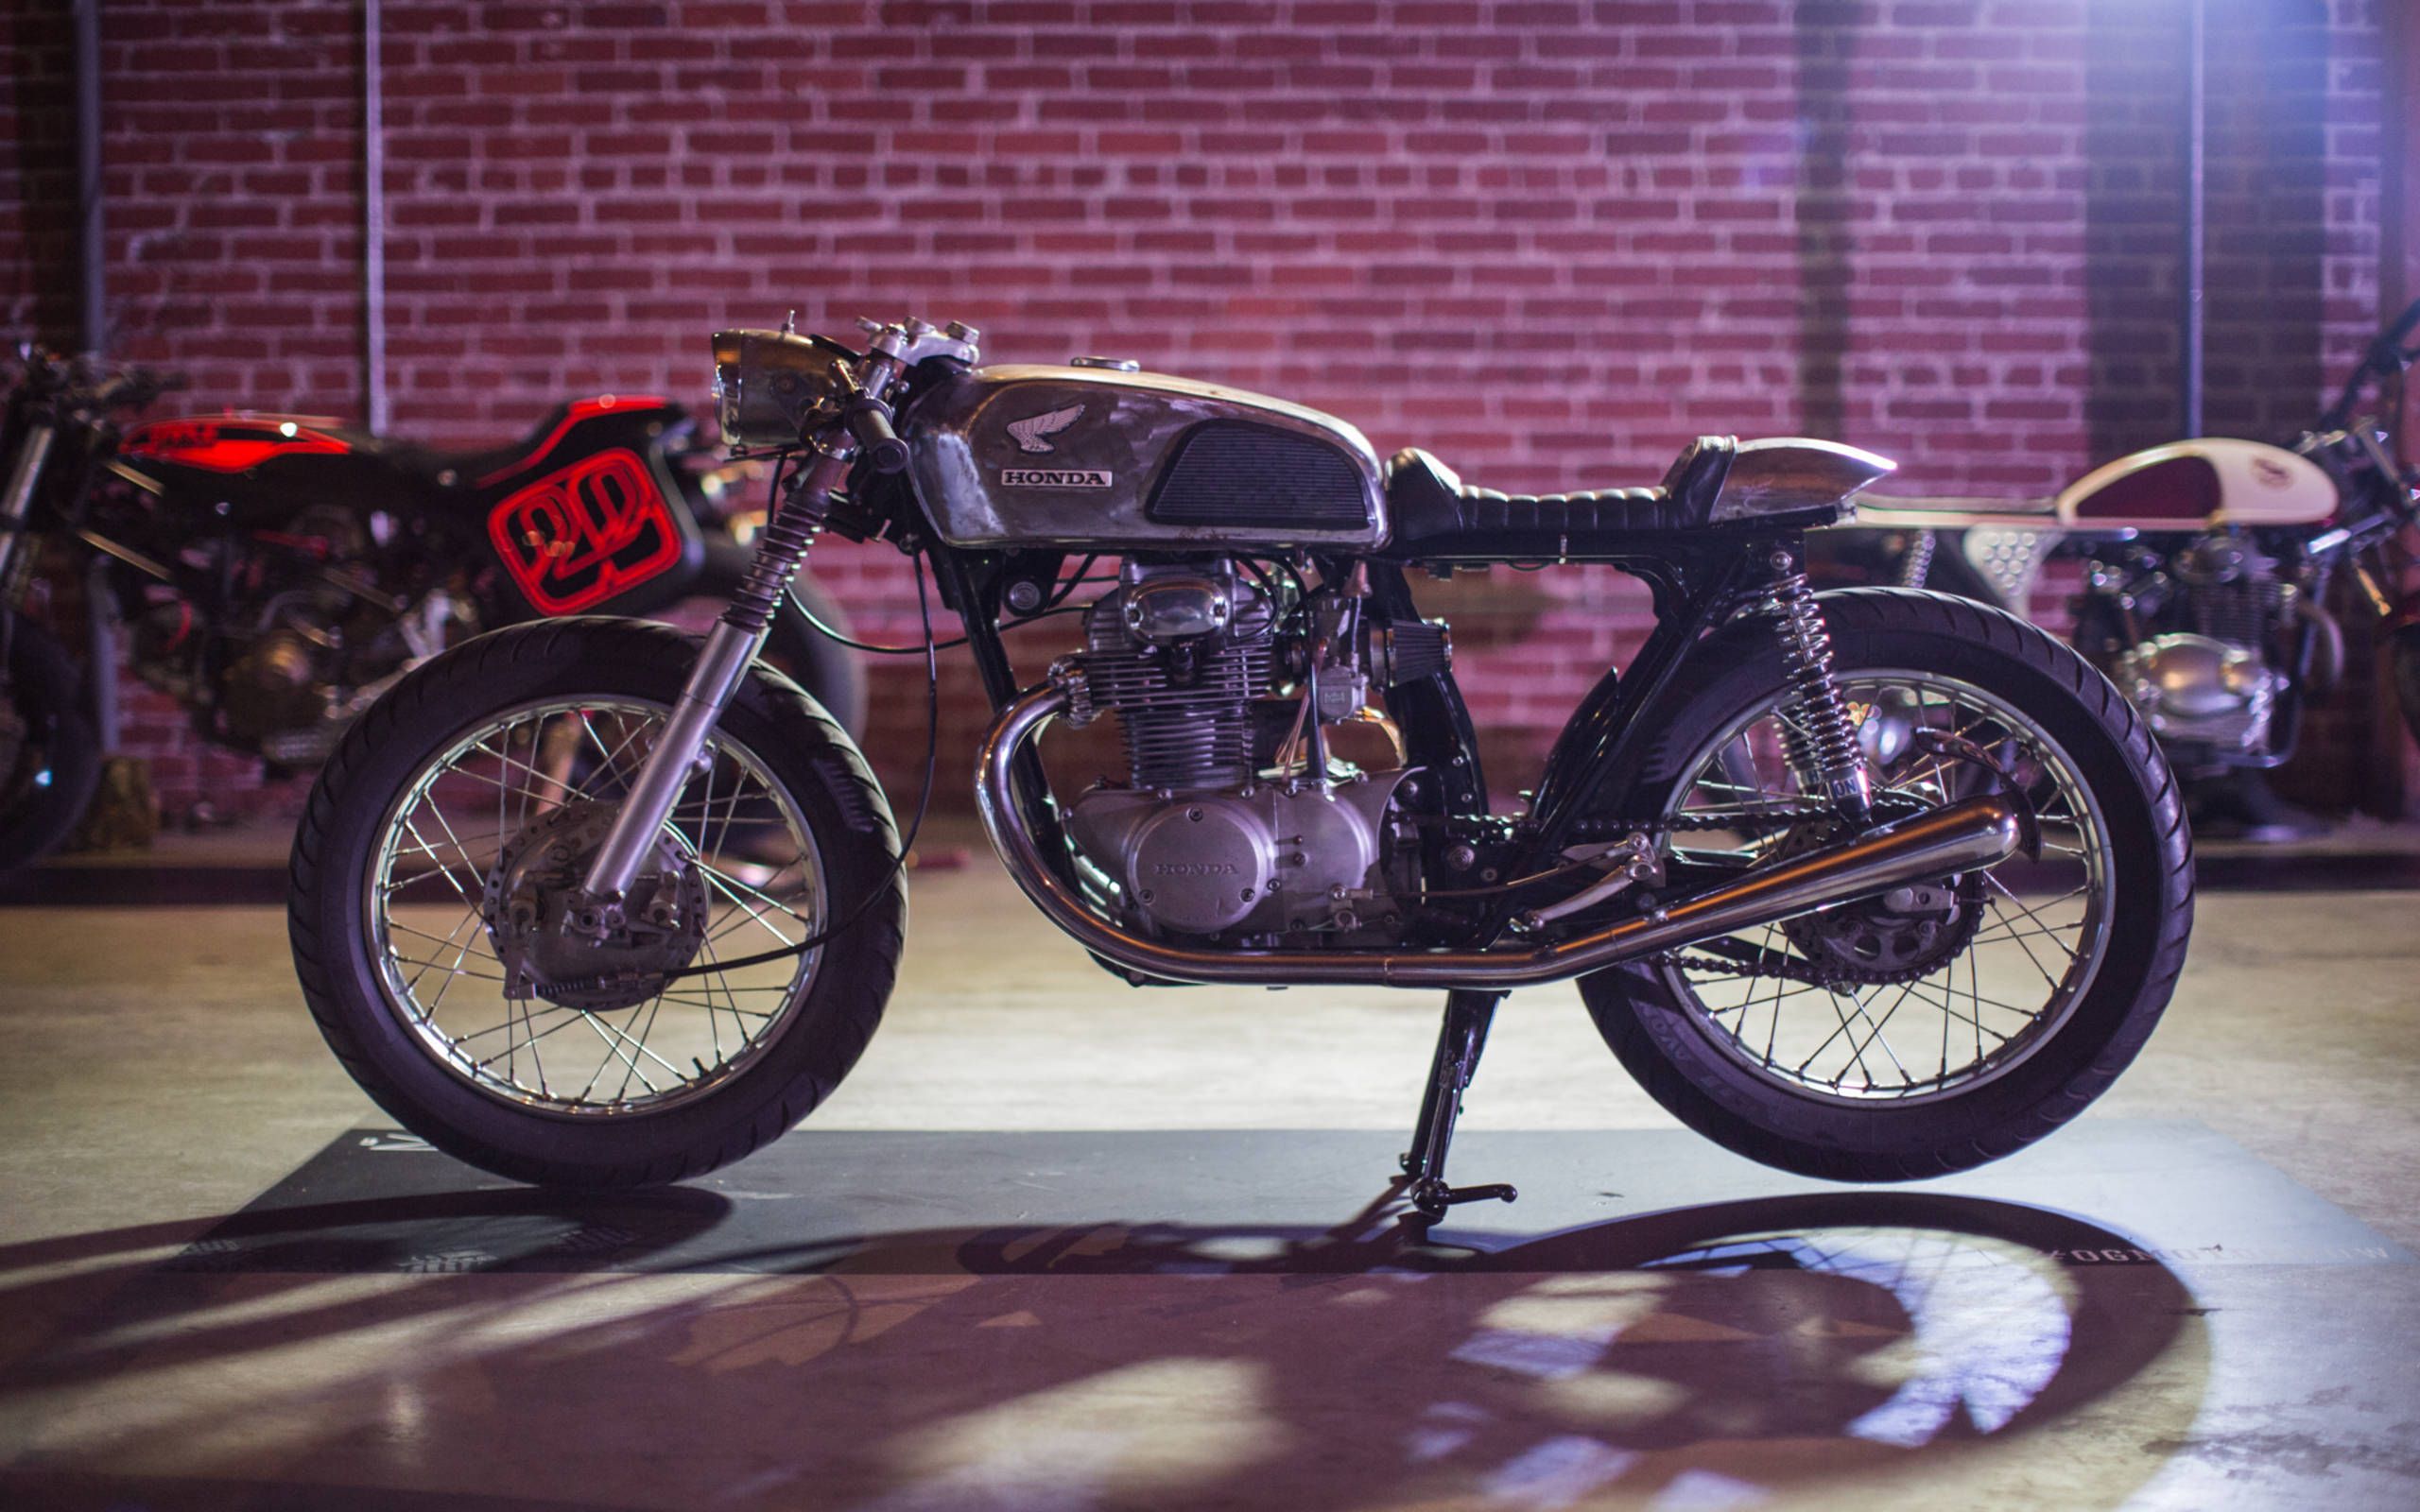 Old 88 Garage - Existem diversos estilos de motos customs, aqui